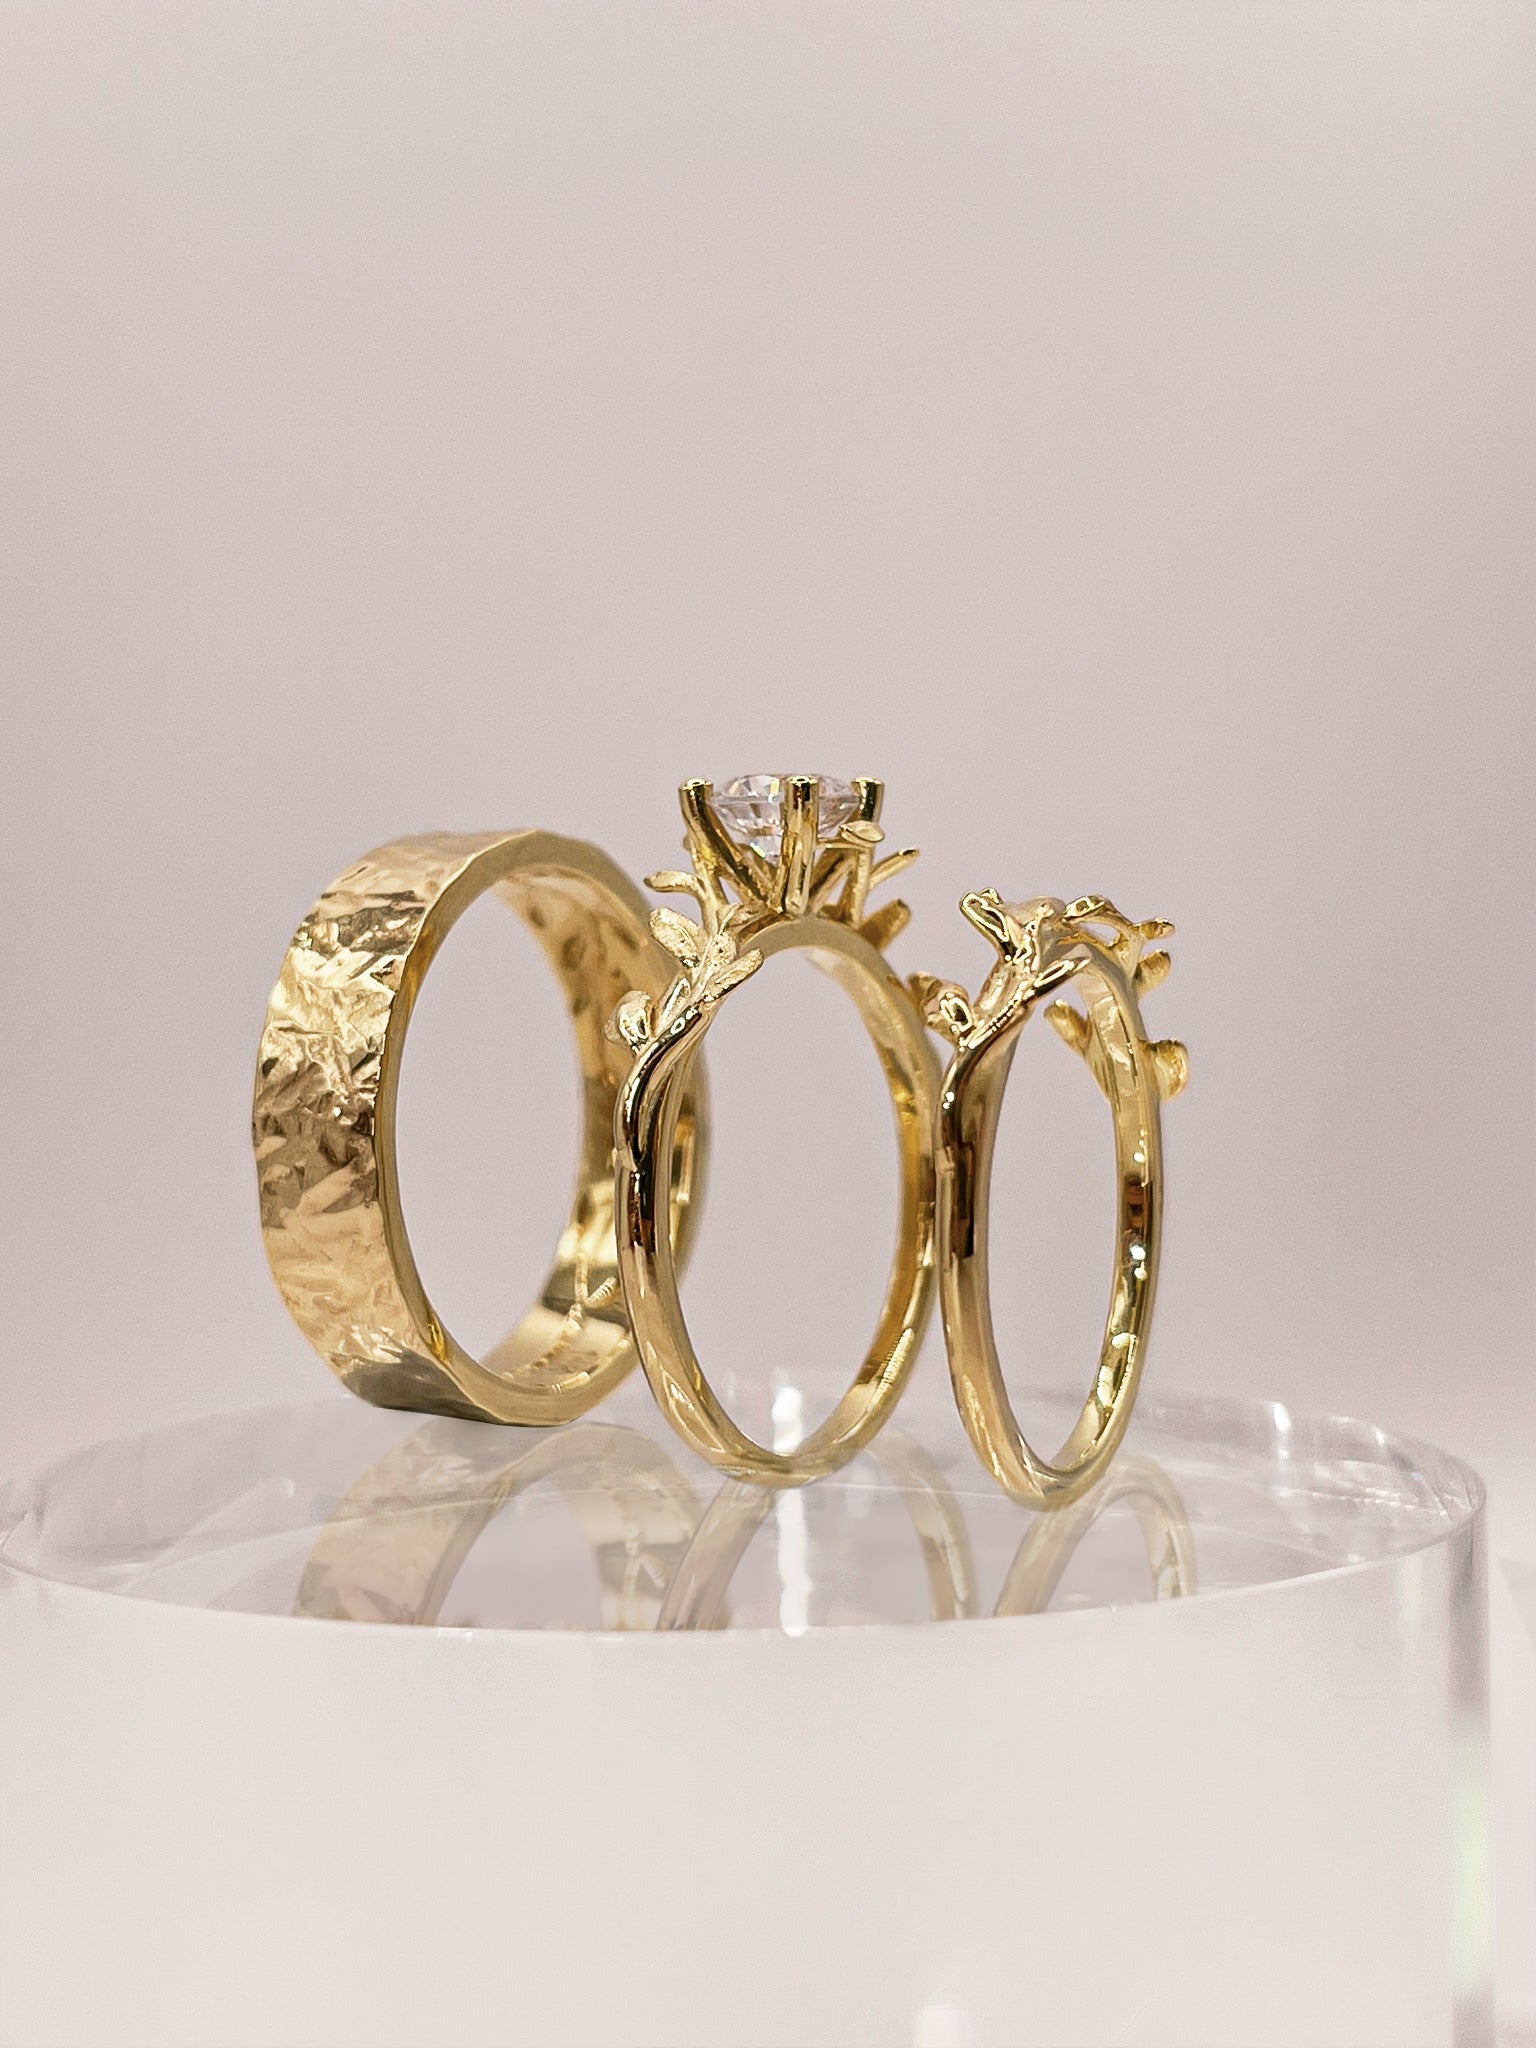 Gold Color Butterfly Rings For Women Men Lover Couple Ring Set